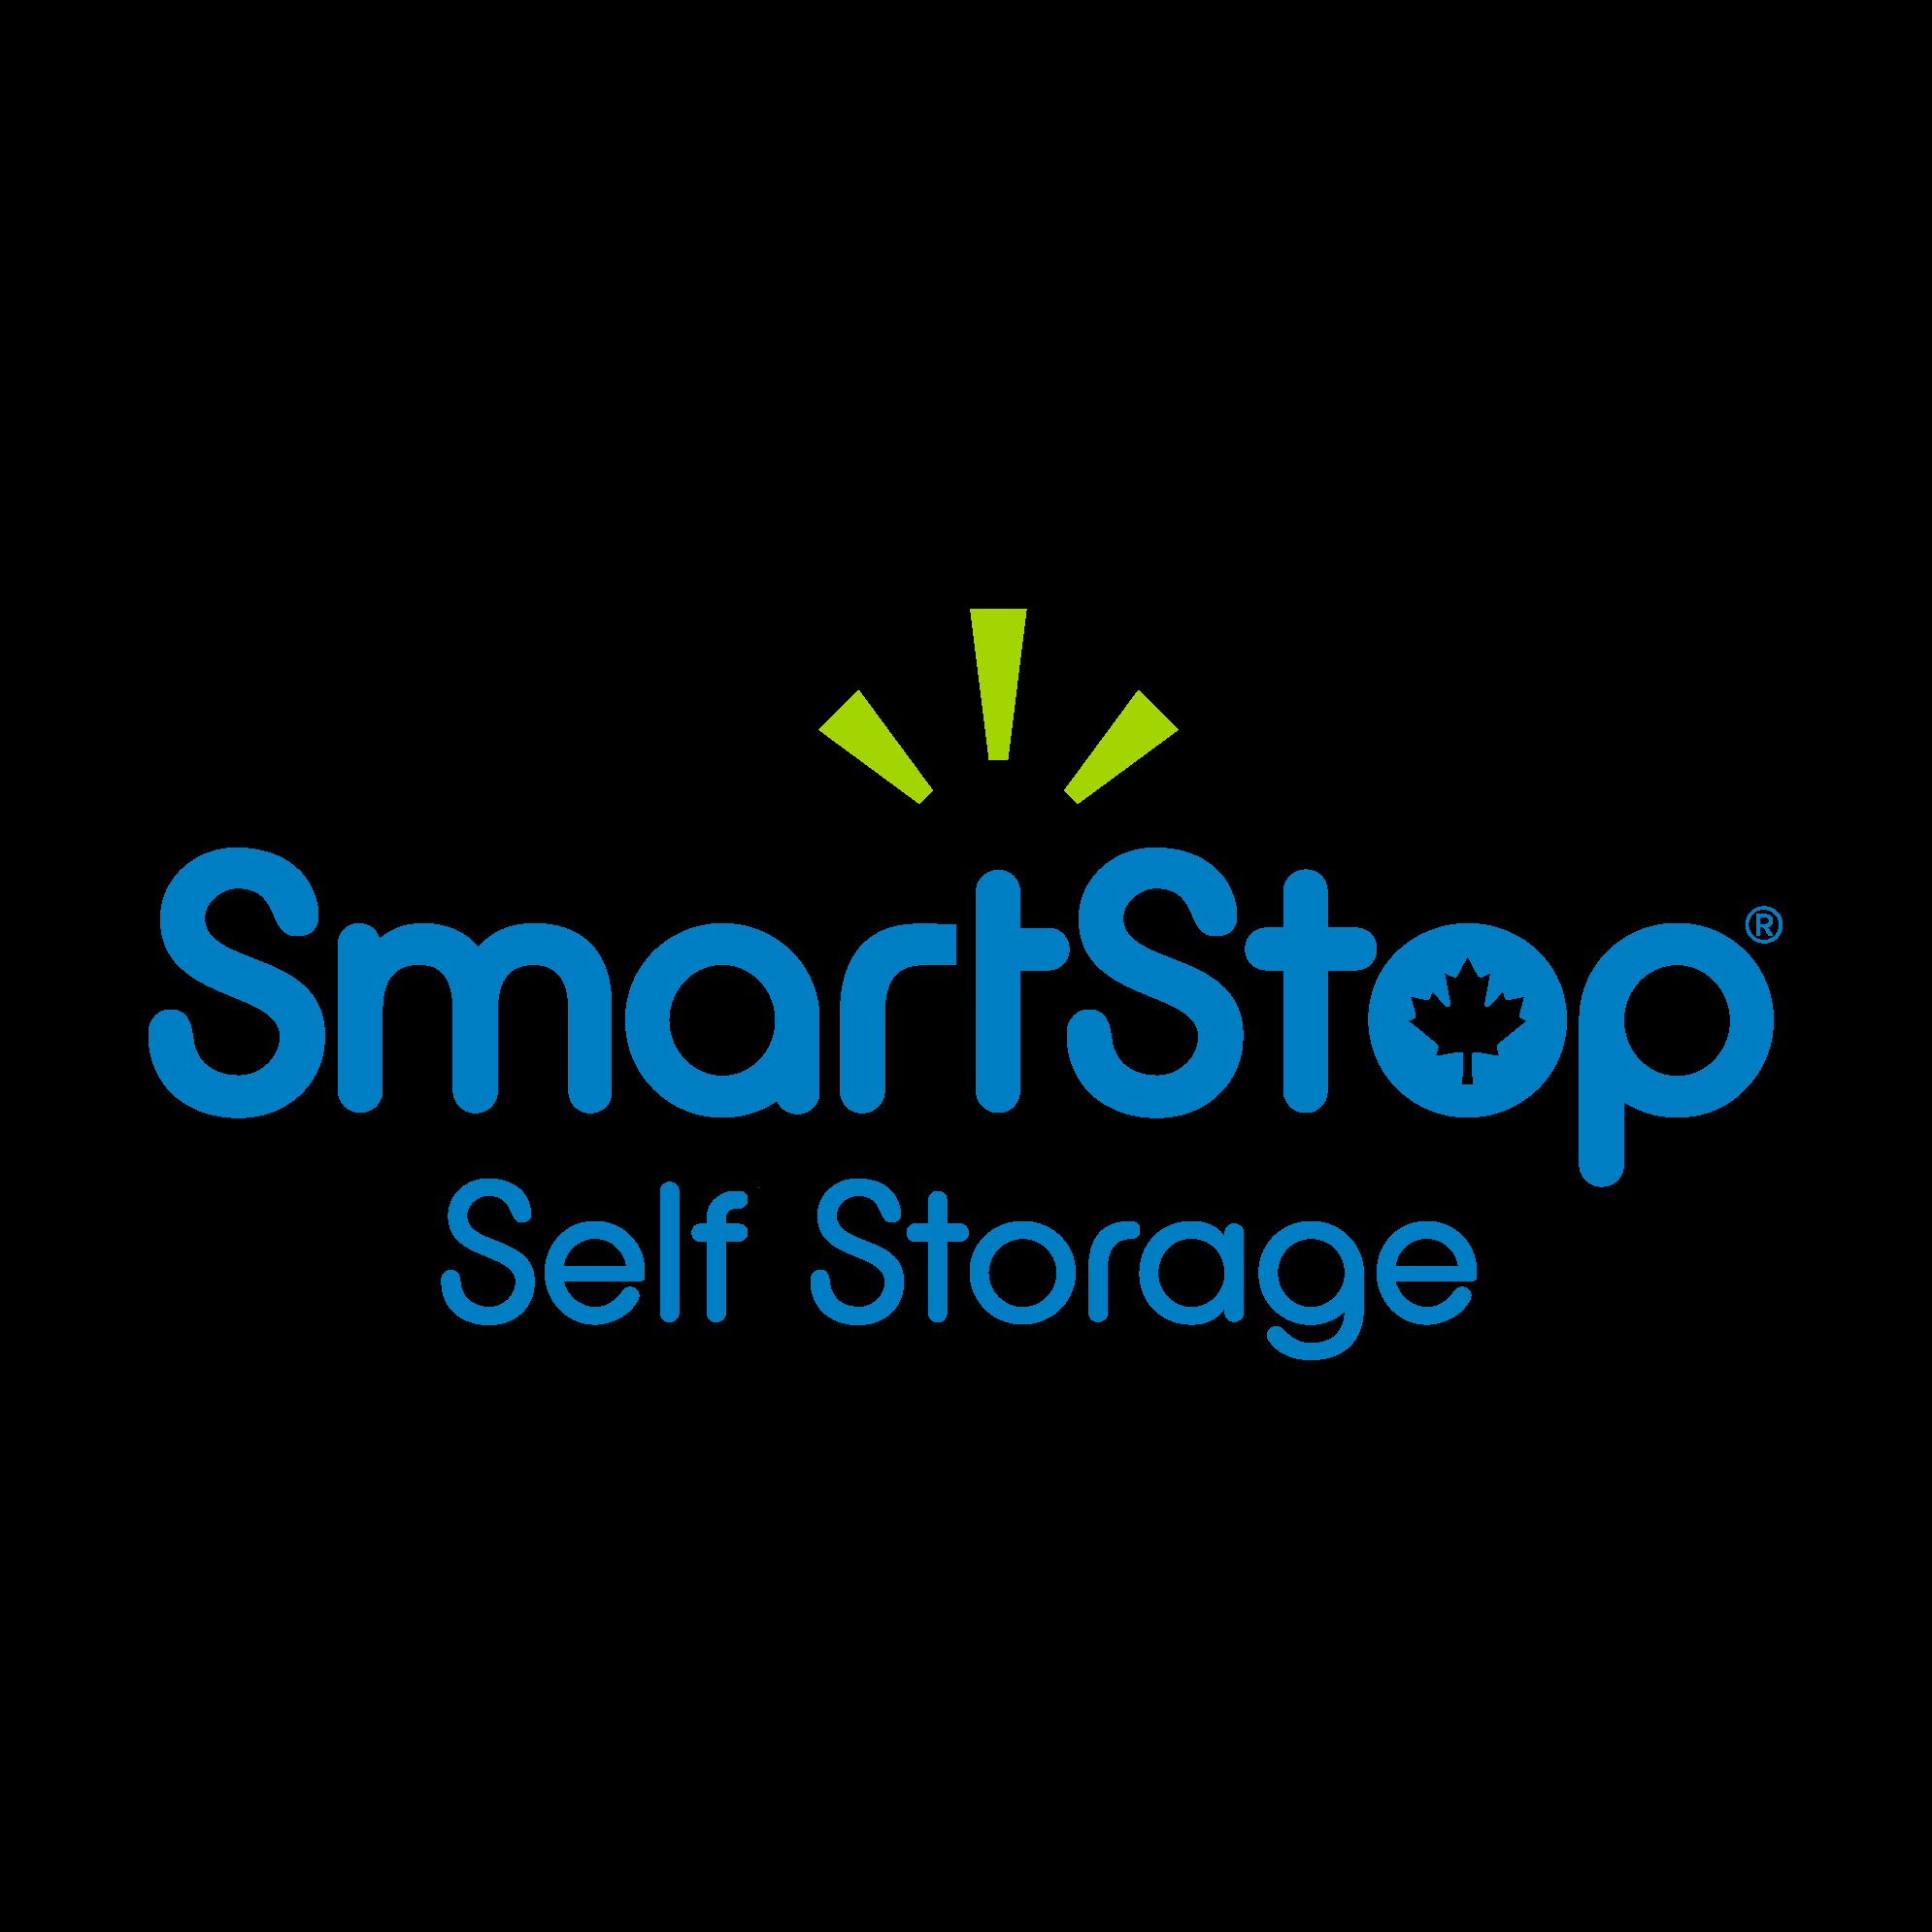 SmartStop Self Storage - Vancouver - Self-Storage